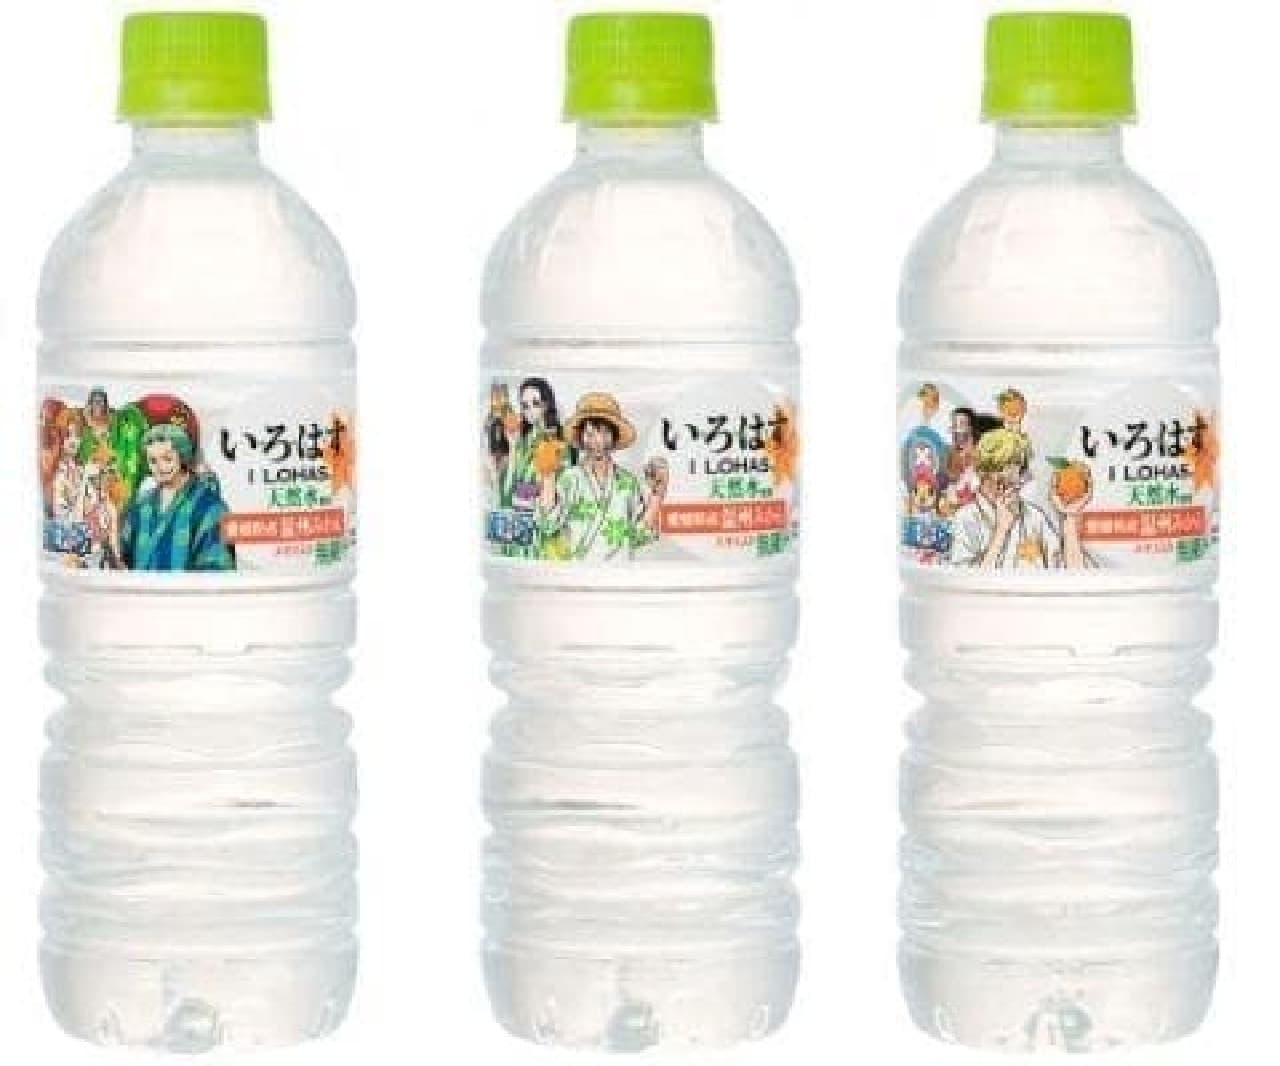 "I LOHAS Mikan" limited design bottle